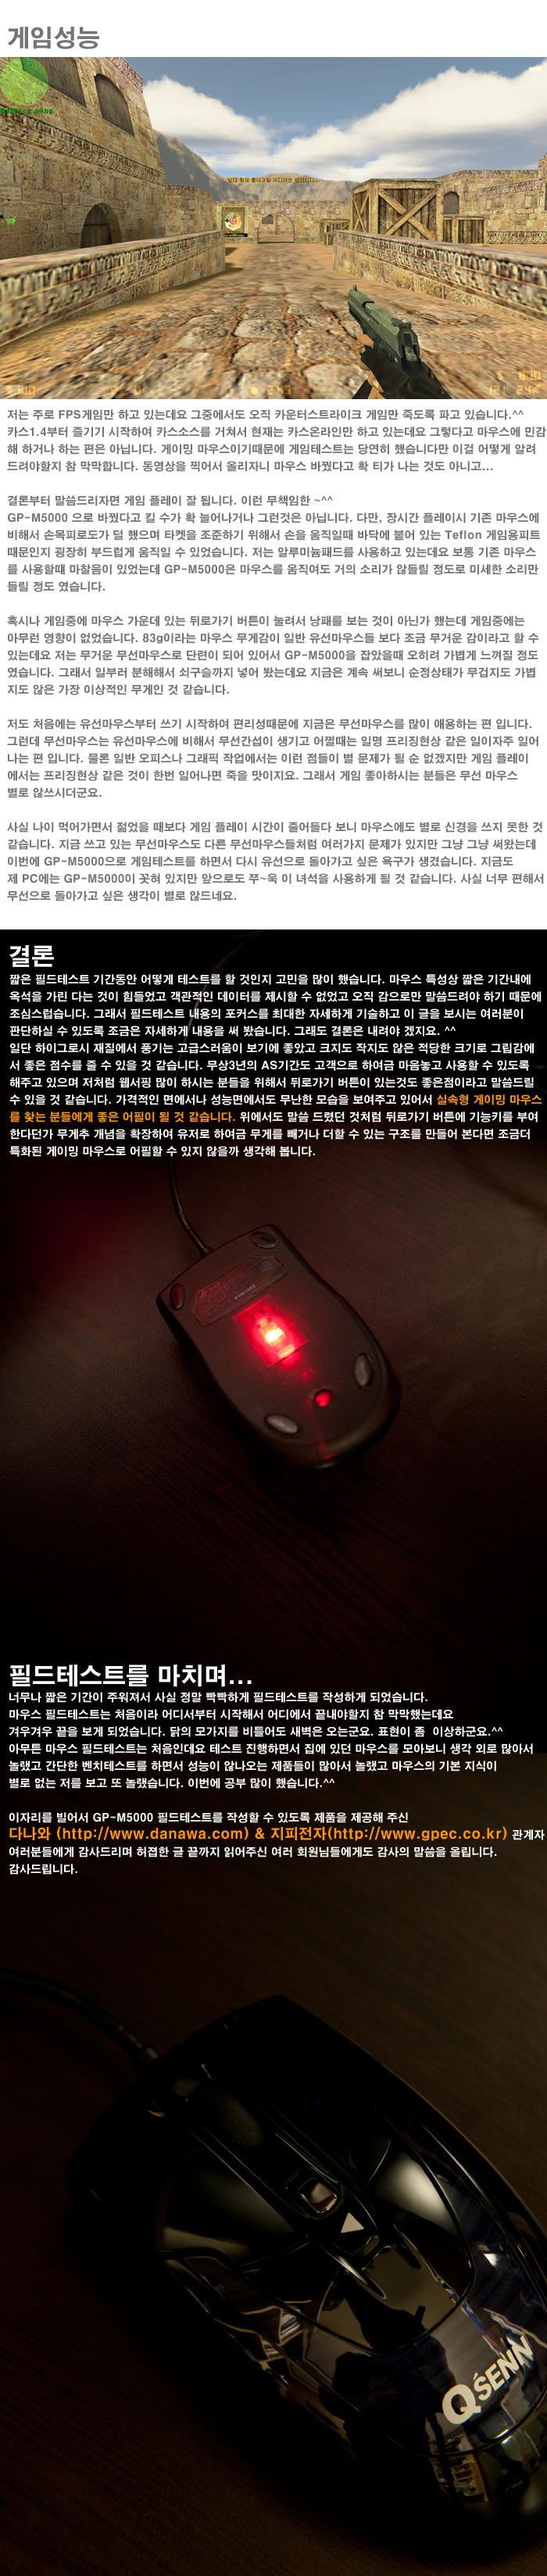 mouse-7.jpg